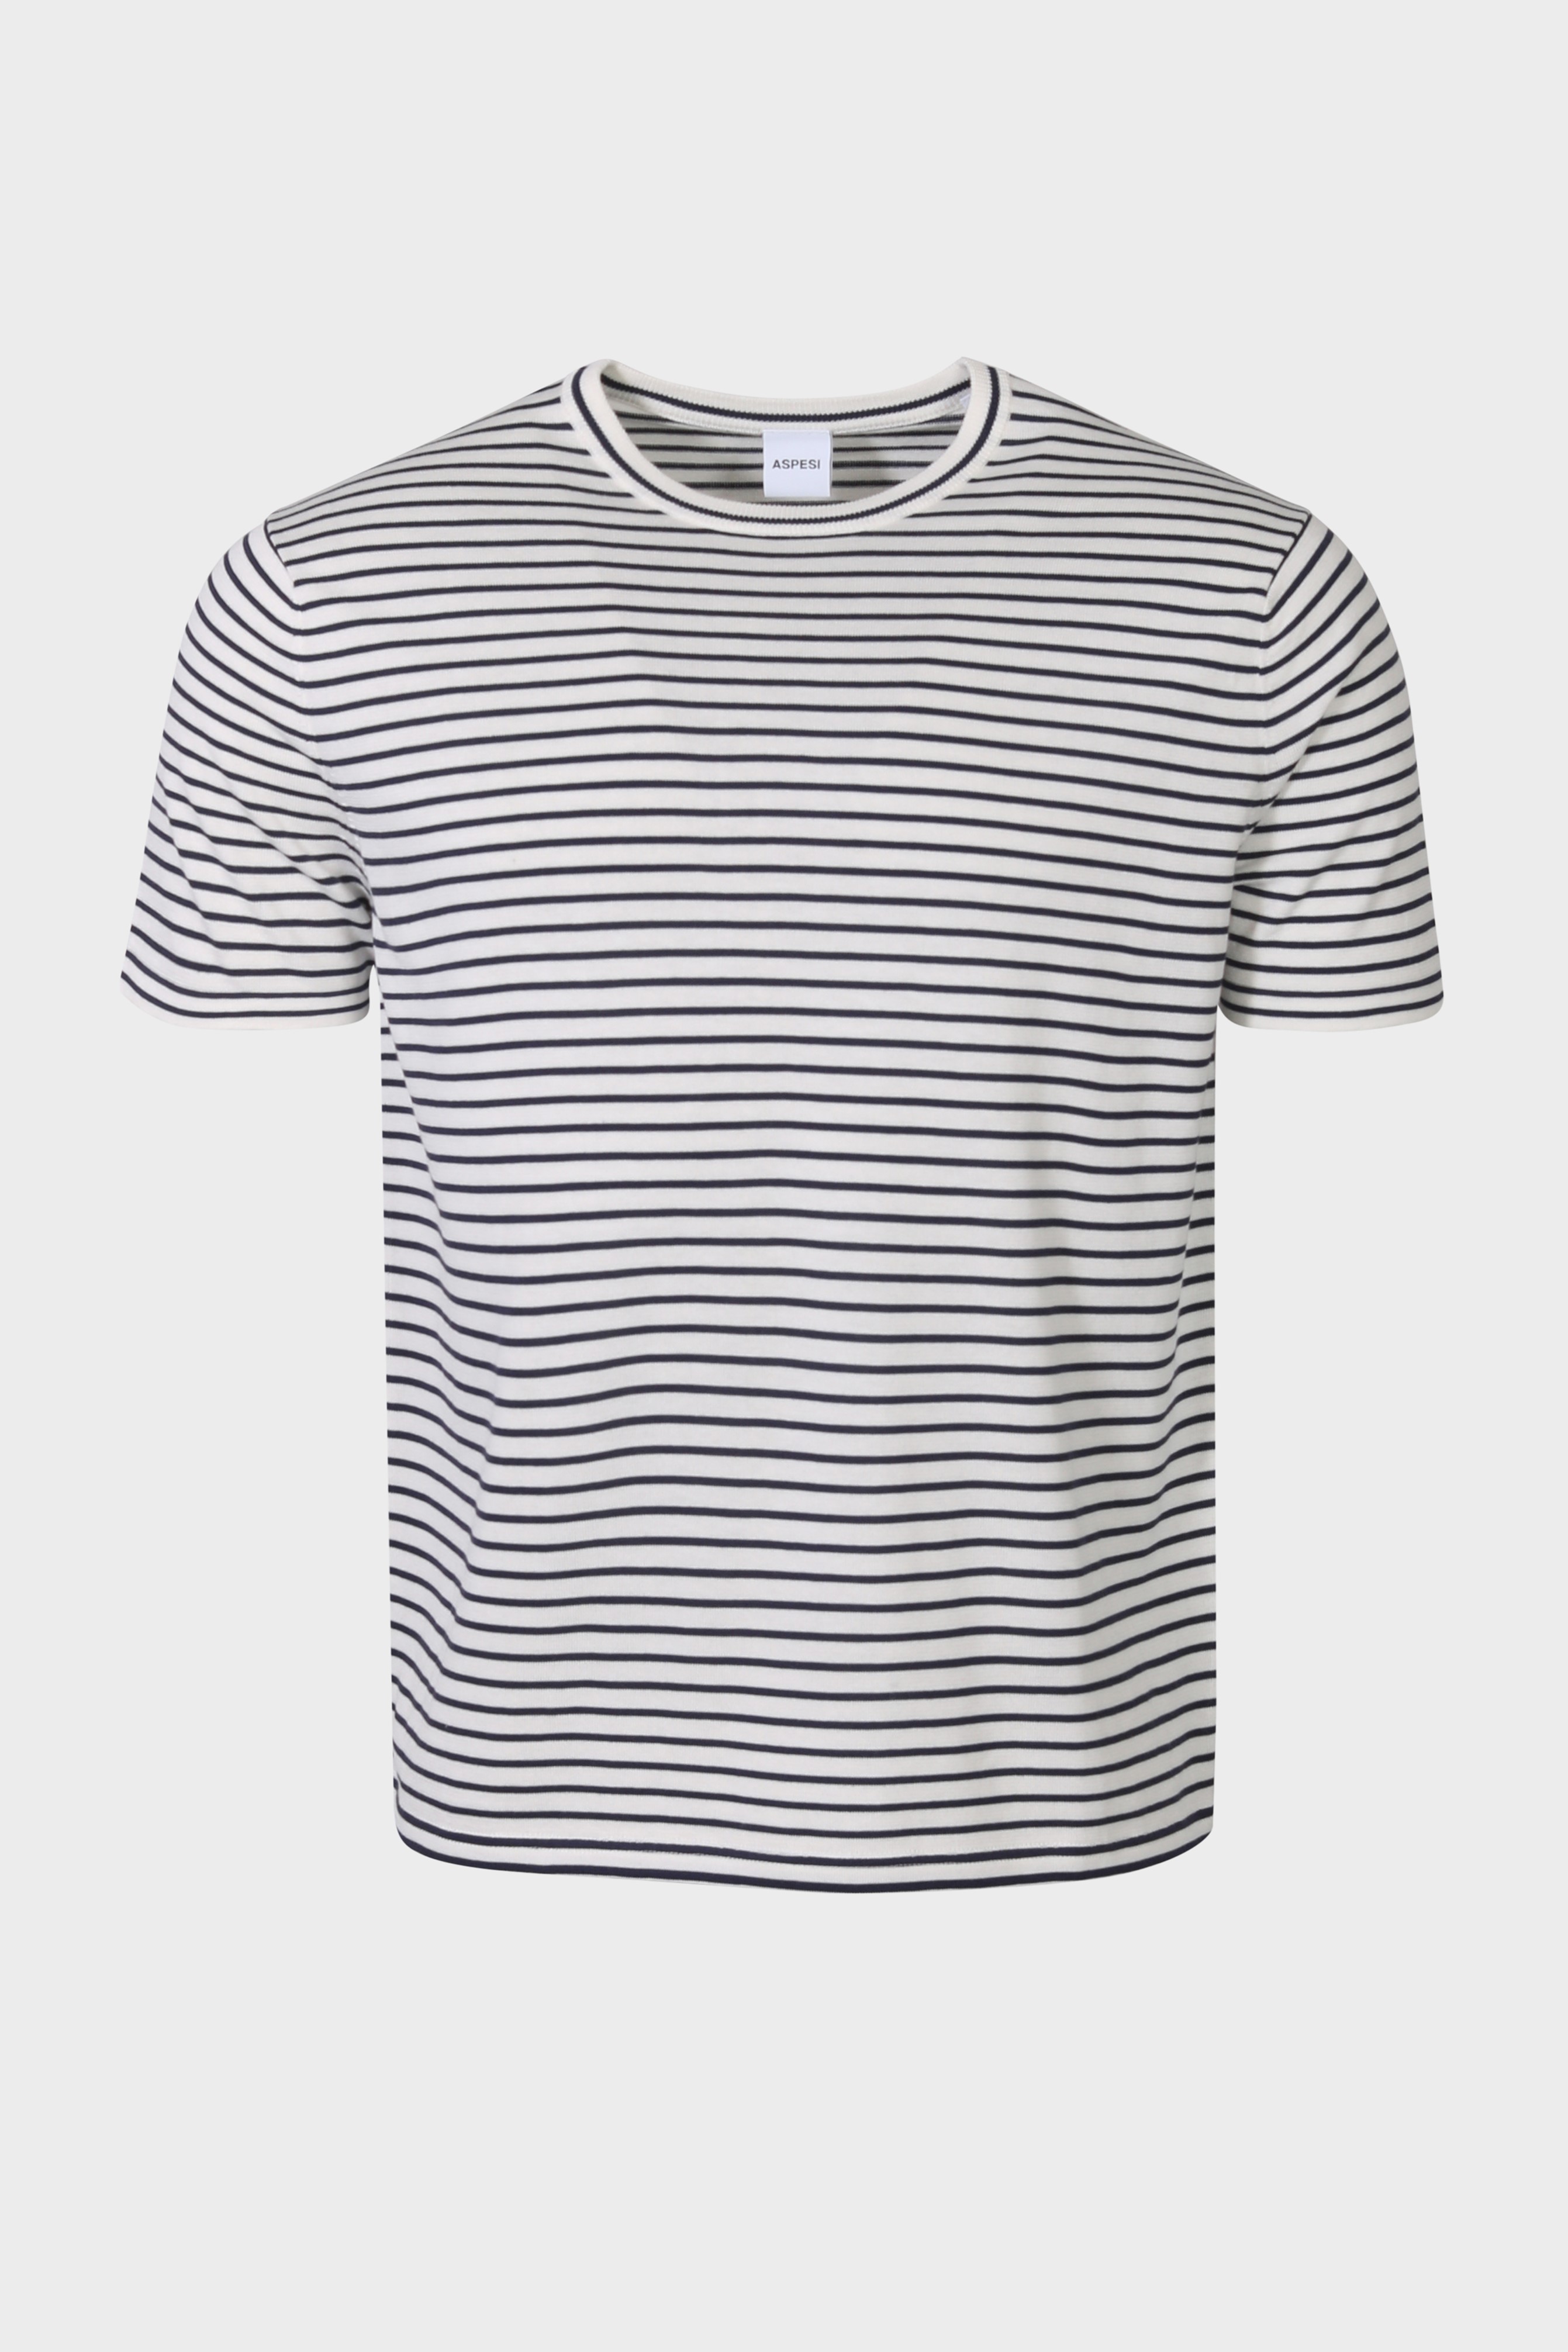 ASPESI Striped Knit T-Shirt in Navy/White 50